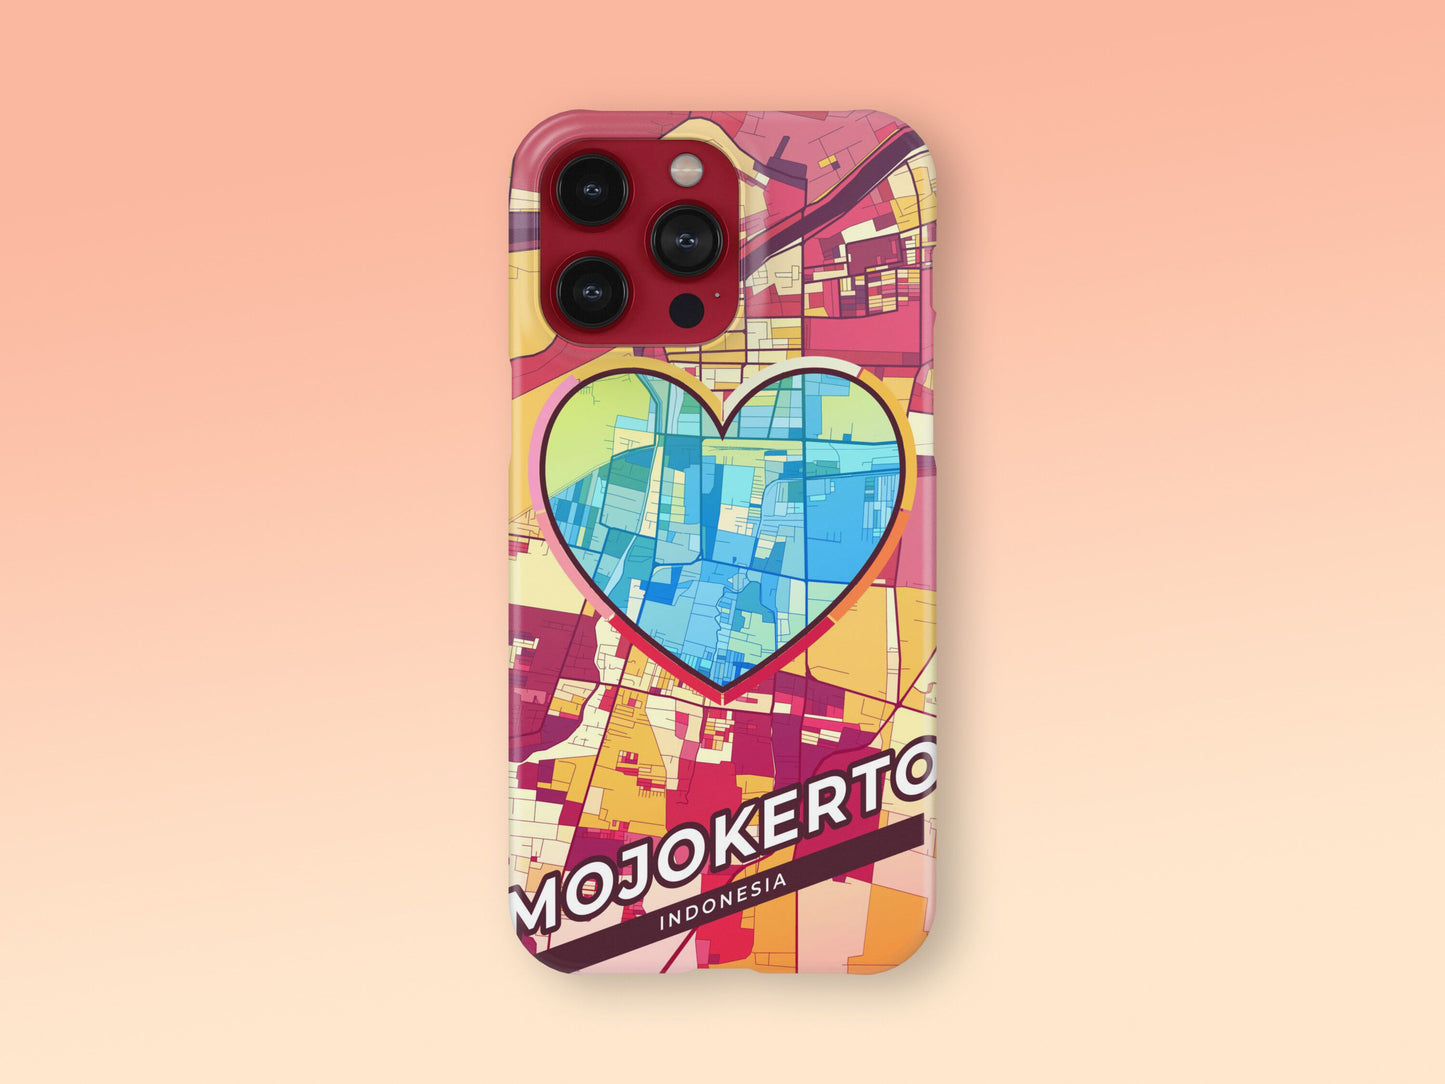 Mojokerto Indonesia slim phone case with colorful icon 2